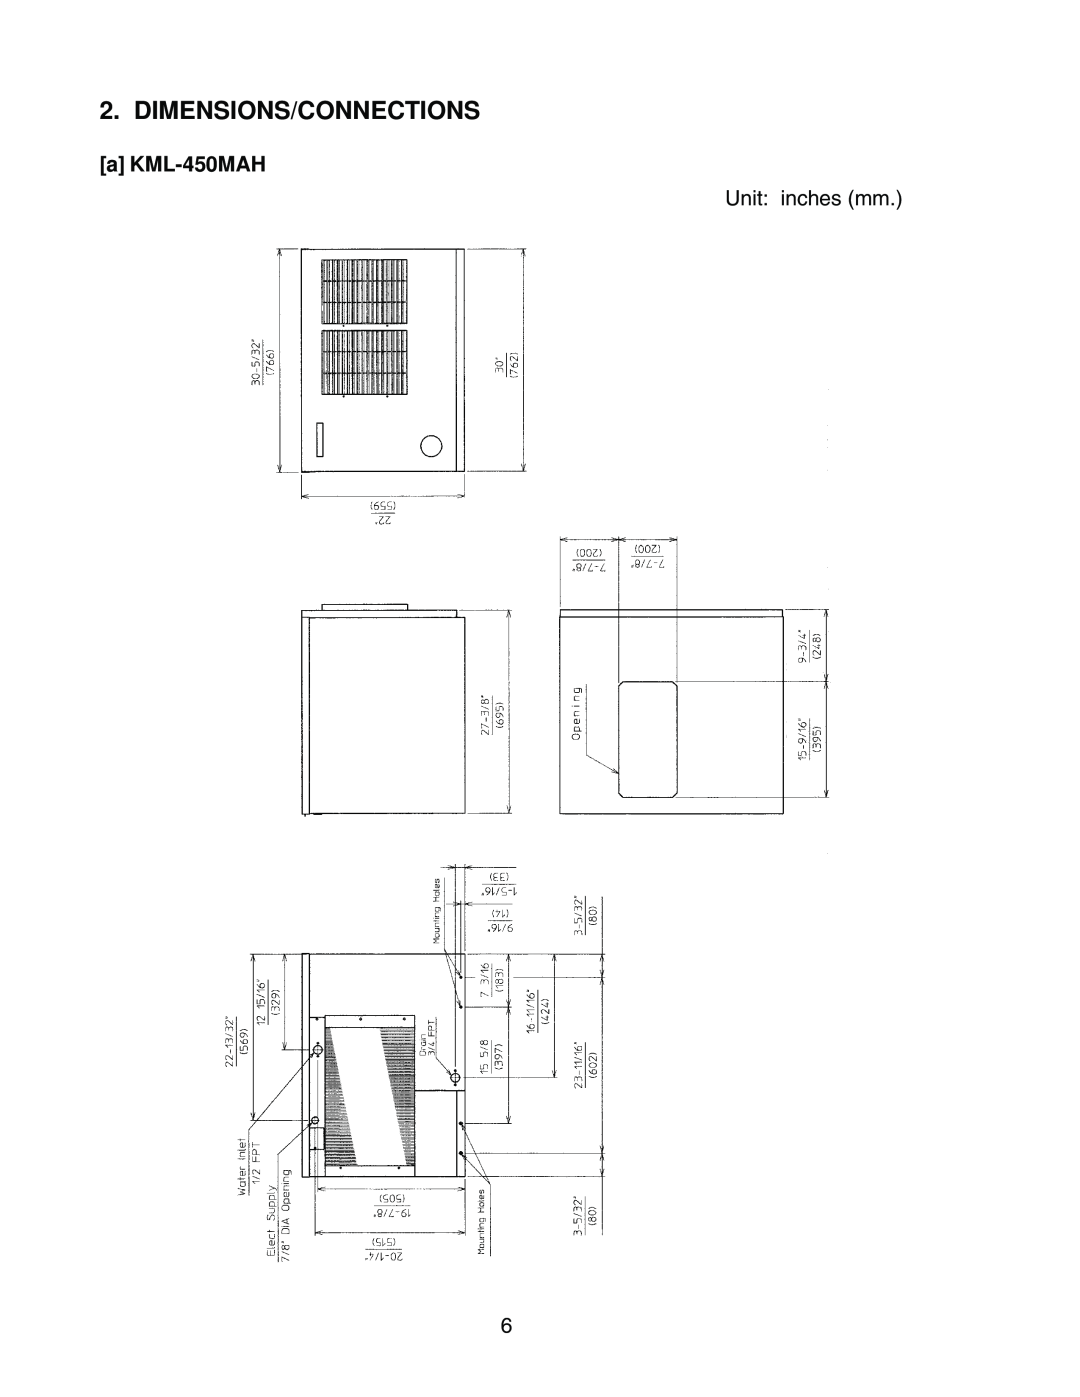 Hoshizaki KML-450MWH instruction manual Dimensions/Connections, a KML-450MAH 